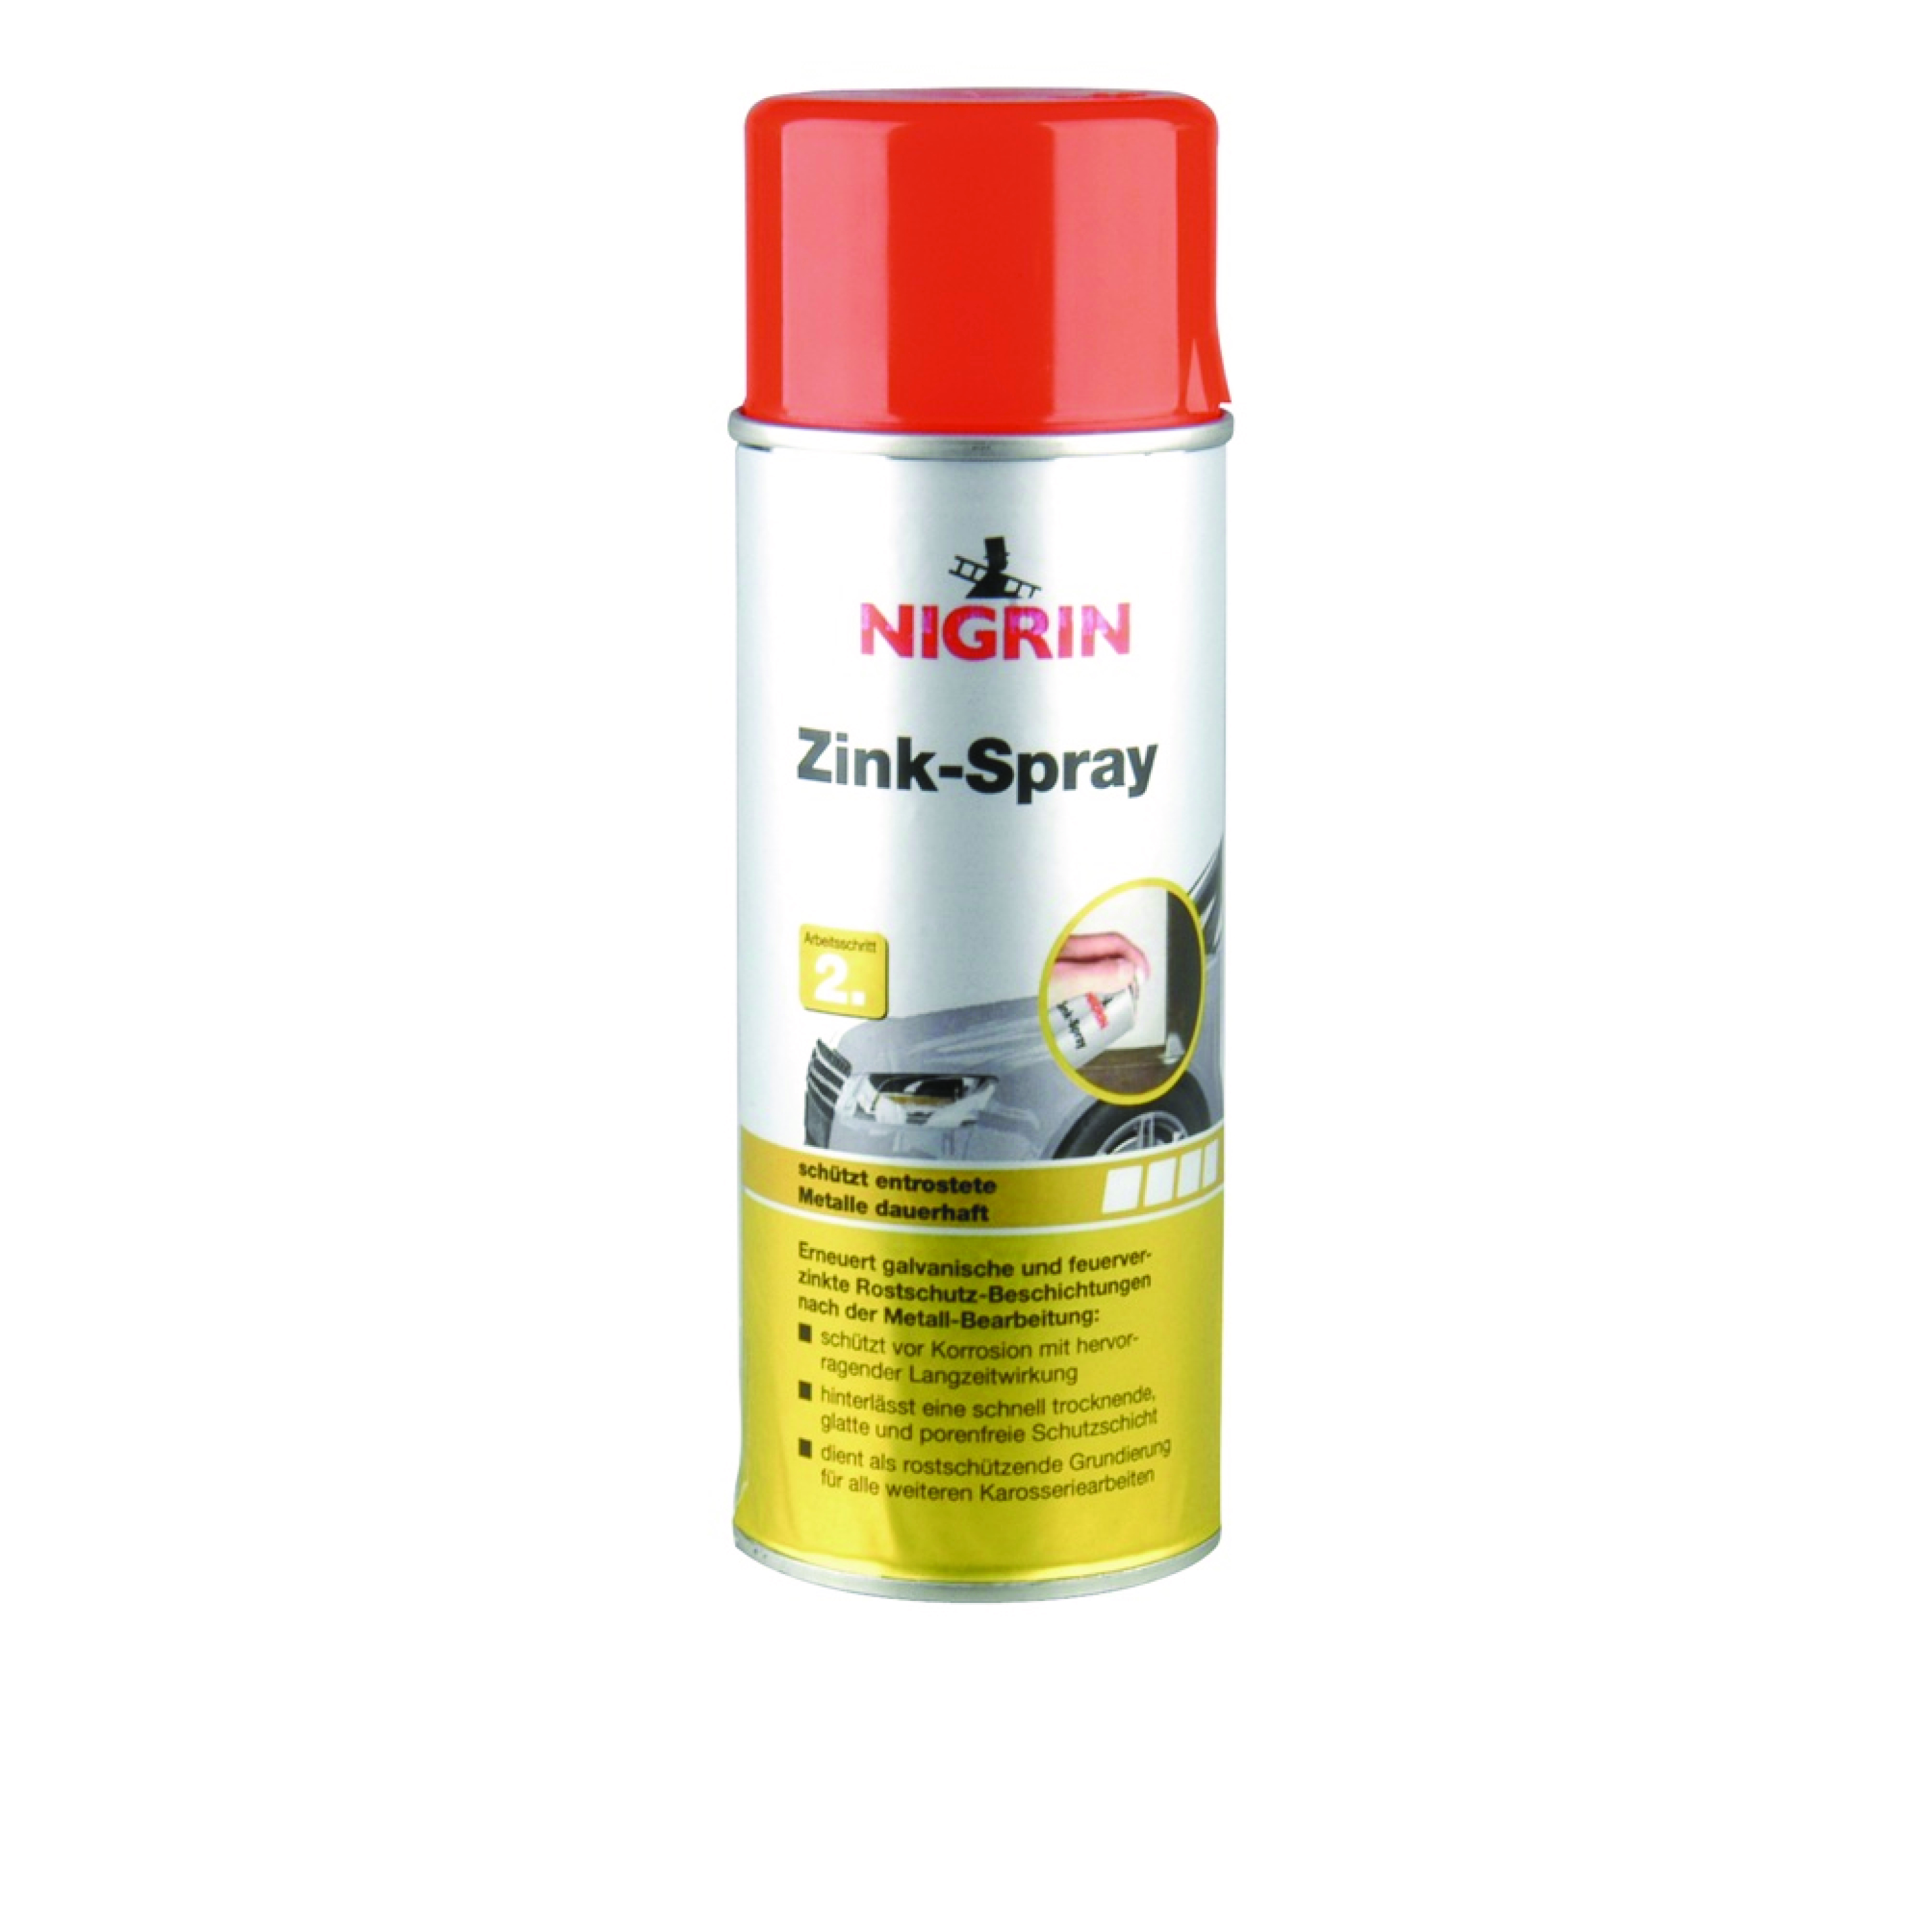 INTERUNION RepairTec Zinkspray NIGRIN 500 ml 